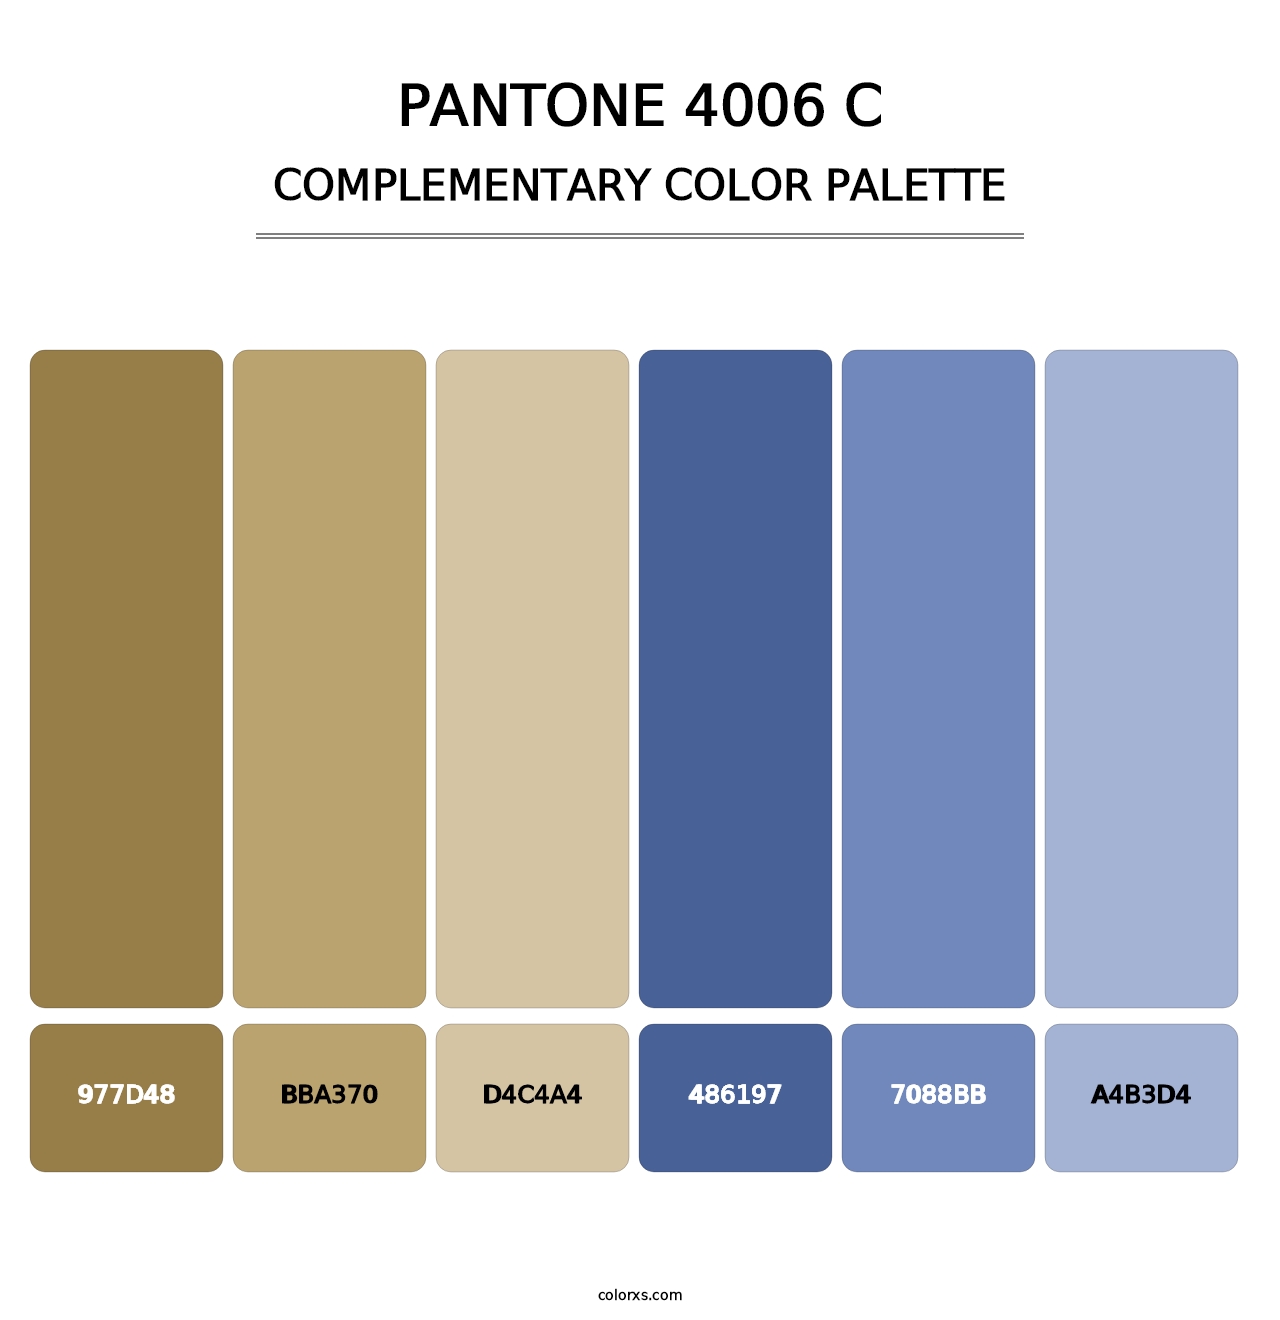 PANTONE 4006 C - Complementary Color Palette